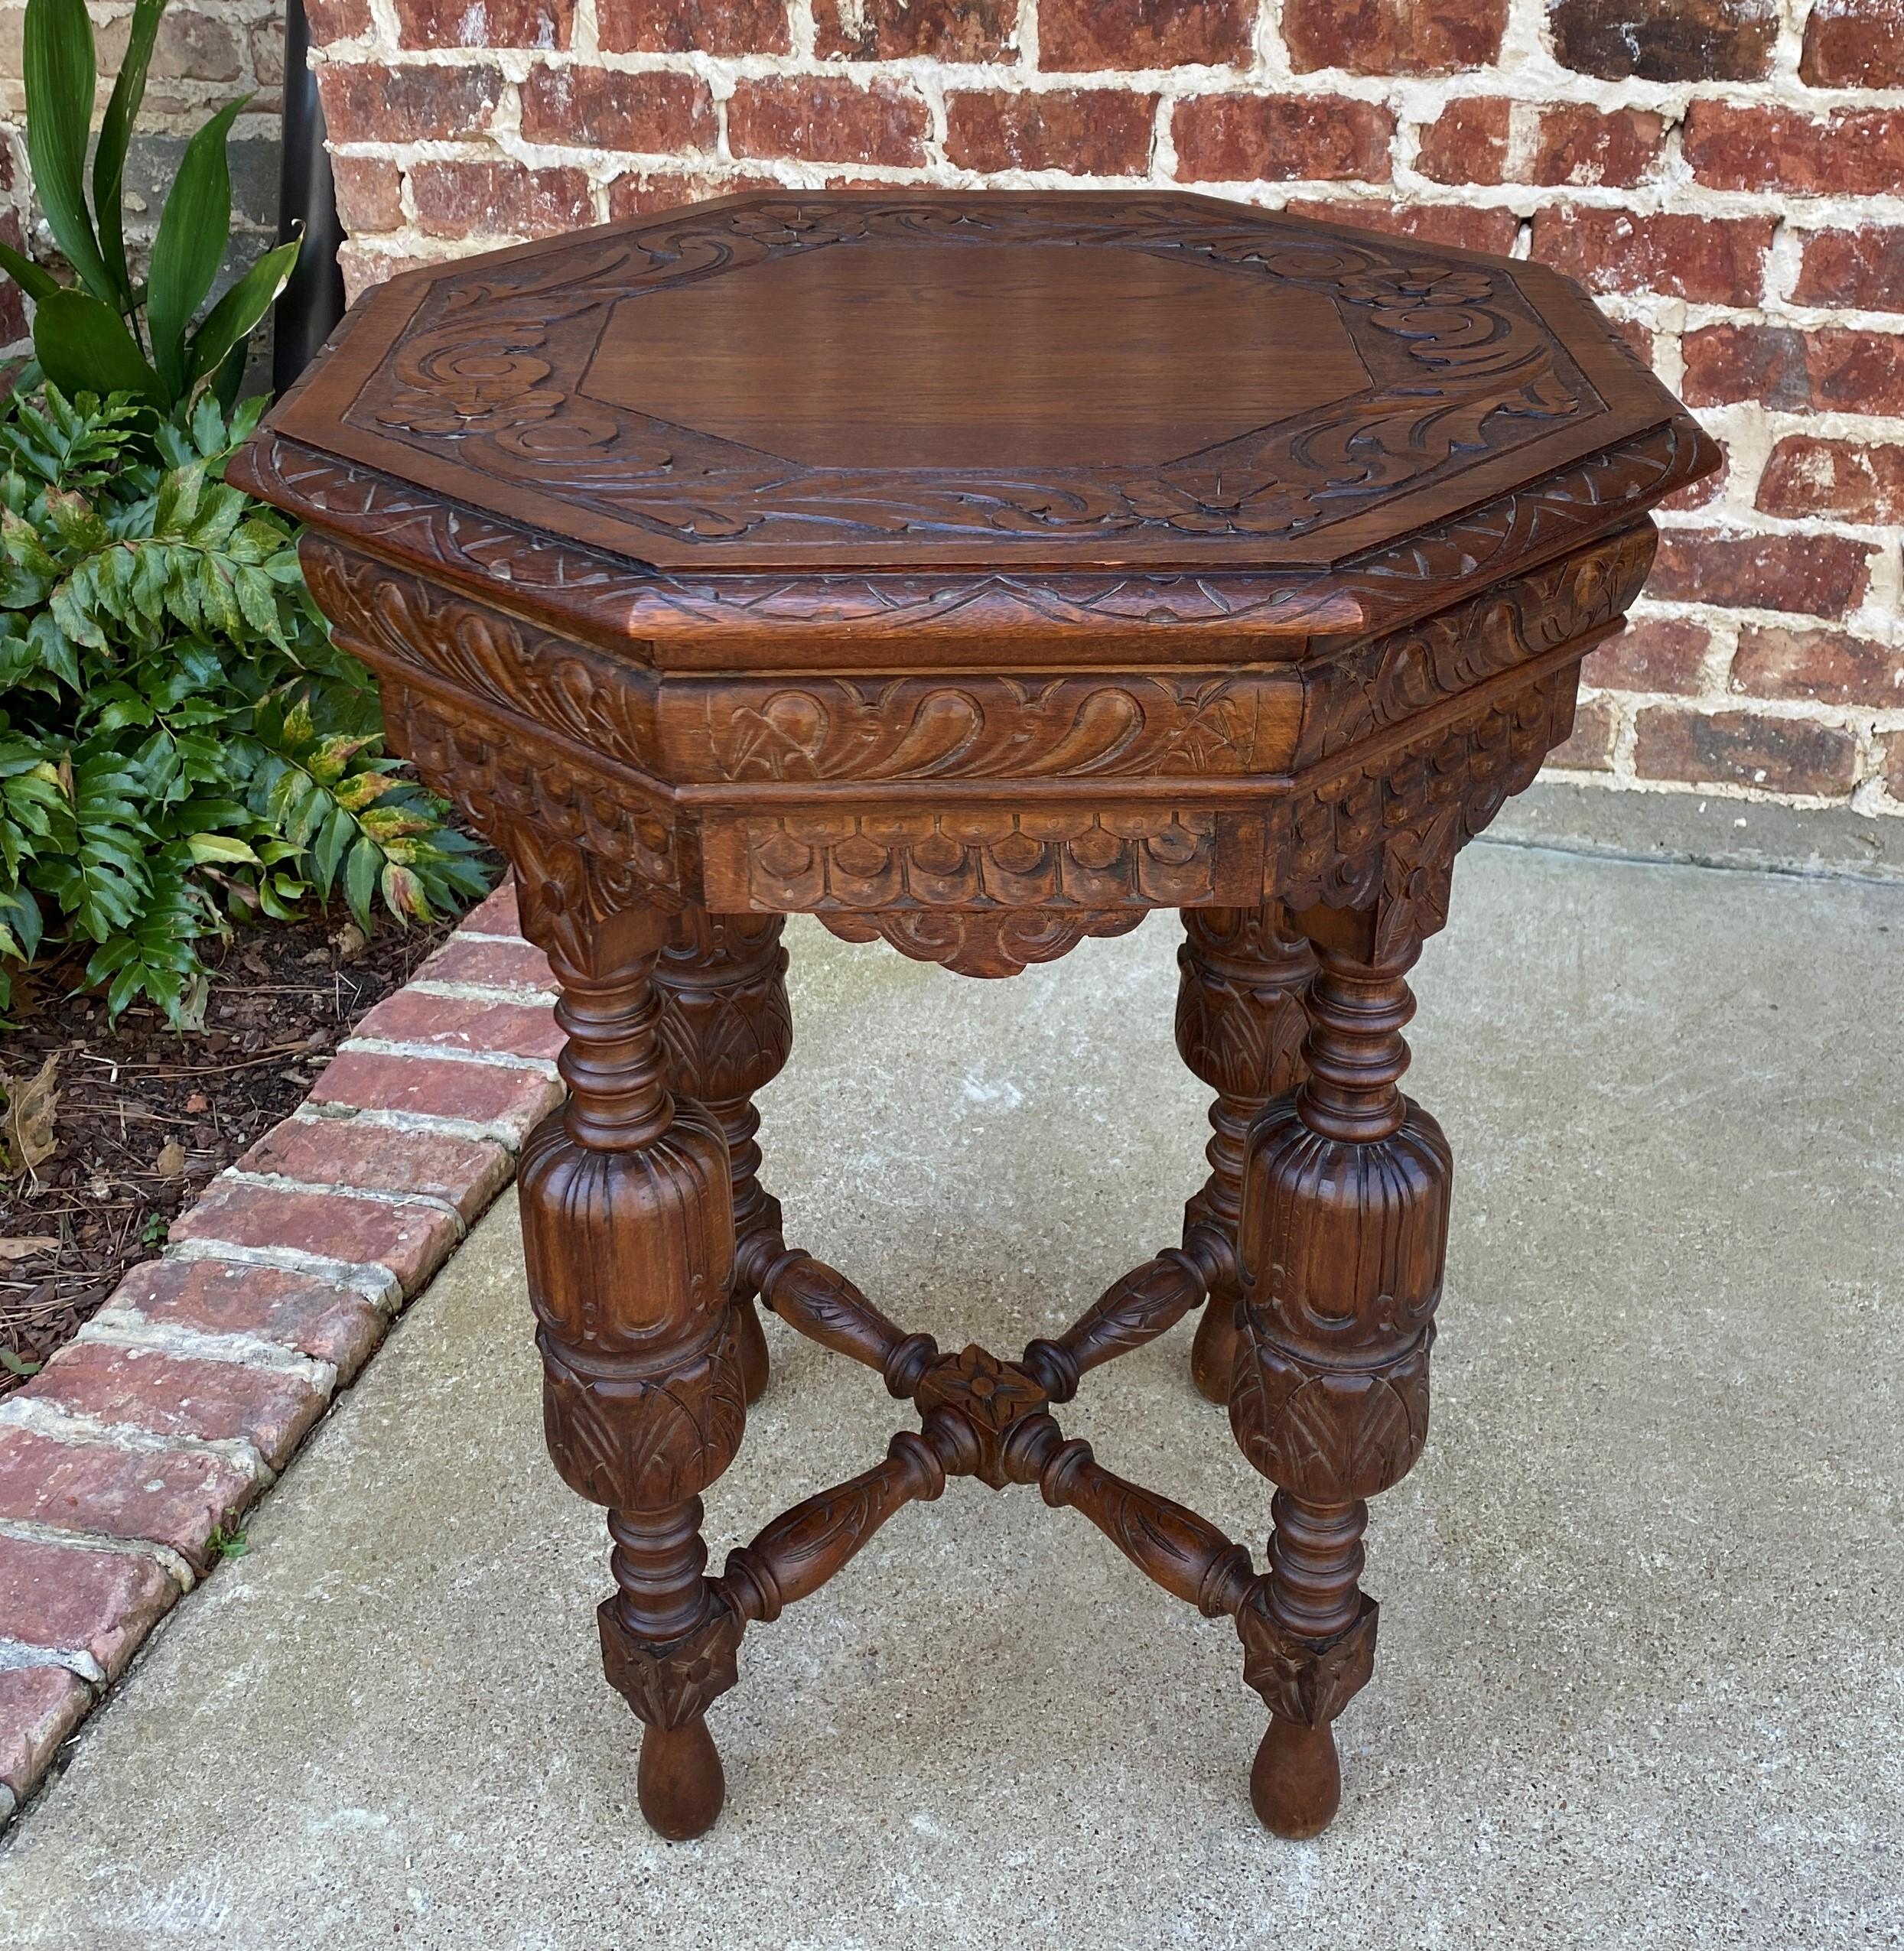 Antique French Octagonal Table Renaissance Revival Carved Oak 19th C For Sale 3